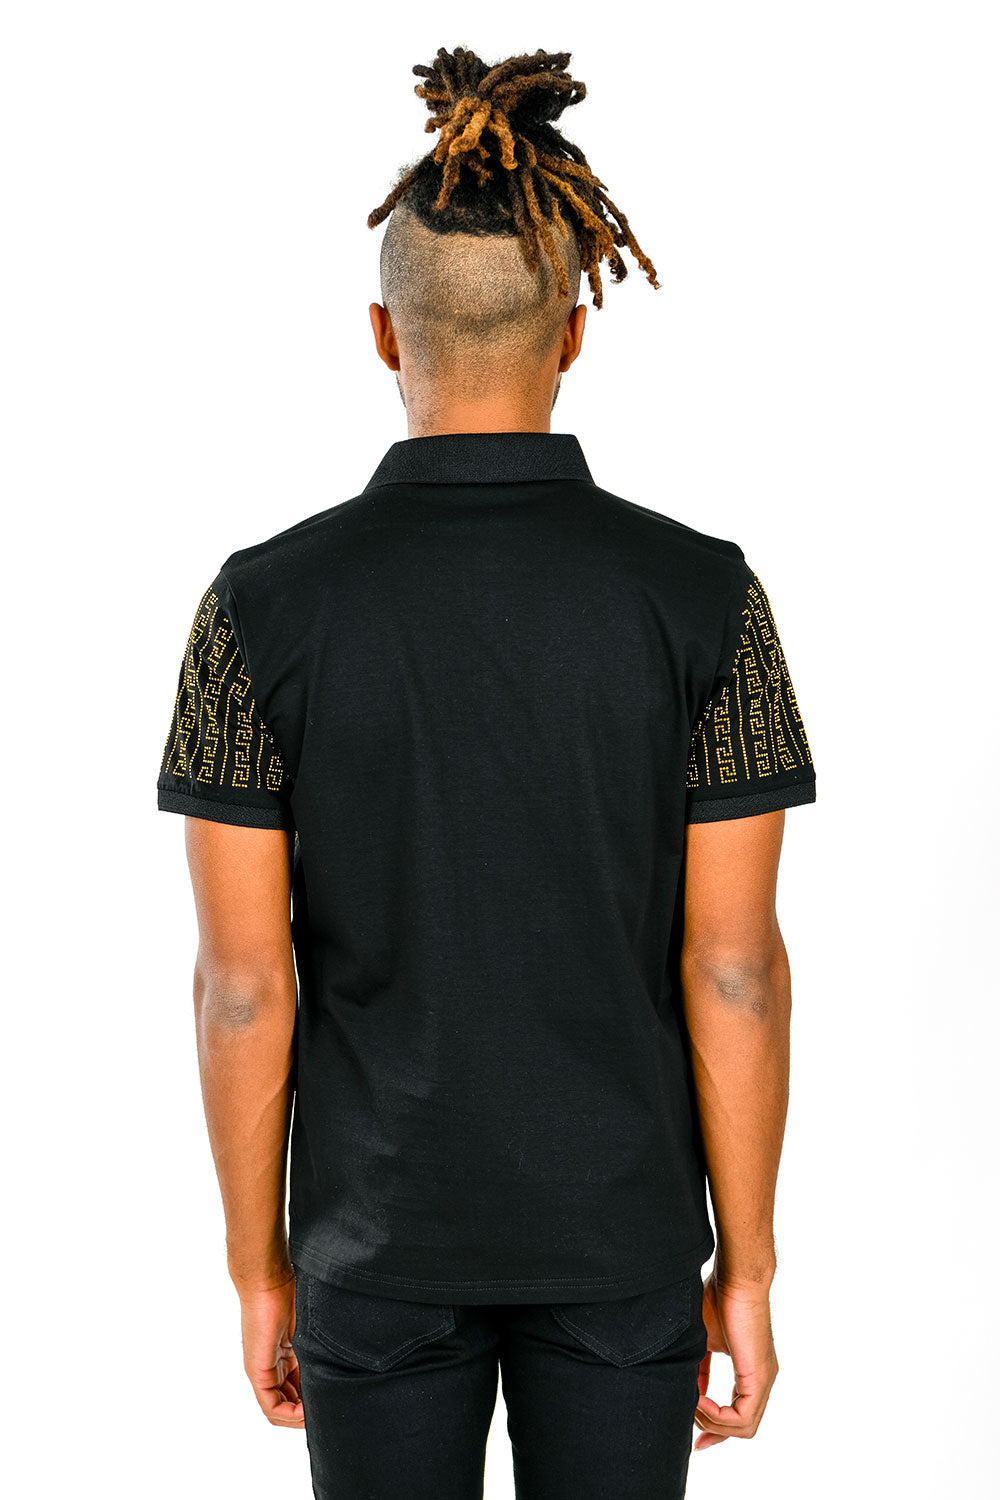 BARABAS Men's Rhinestone Greek pattern Short Sleeve Polo Shirt PS107 Black Gold